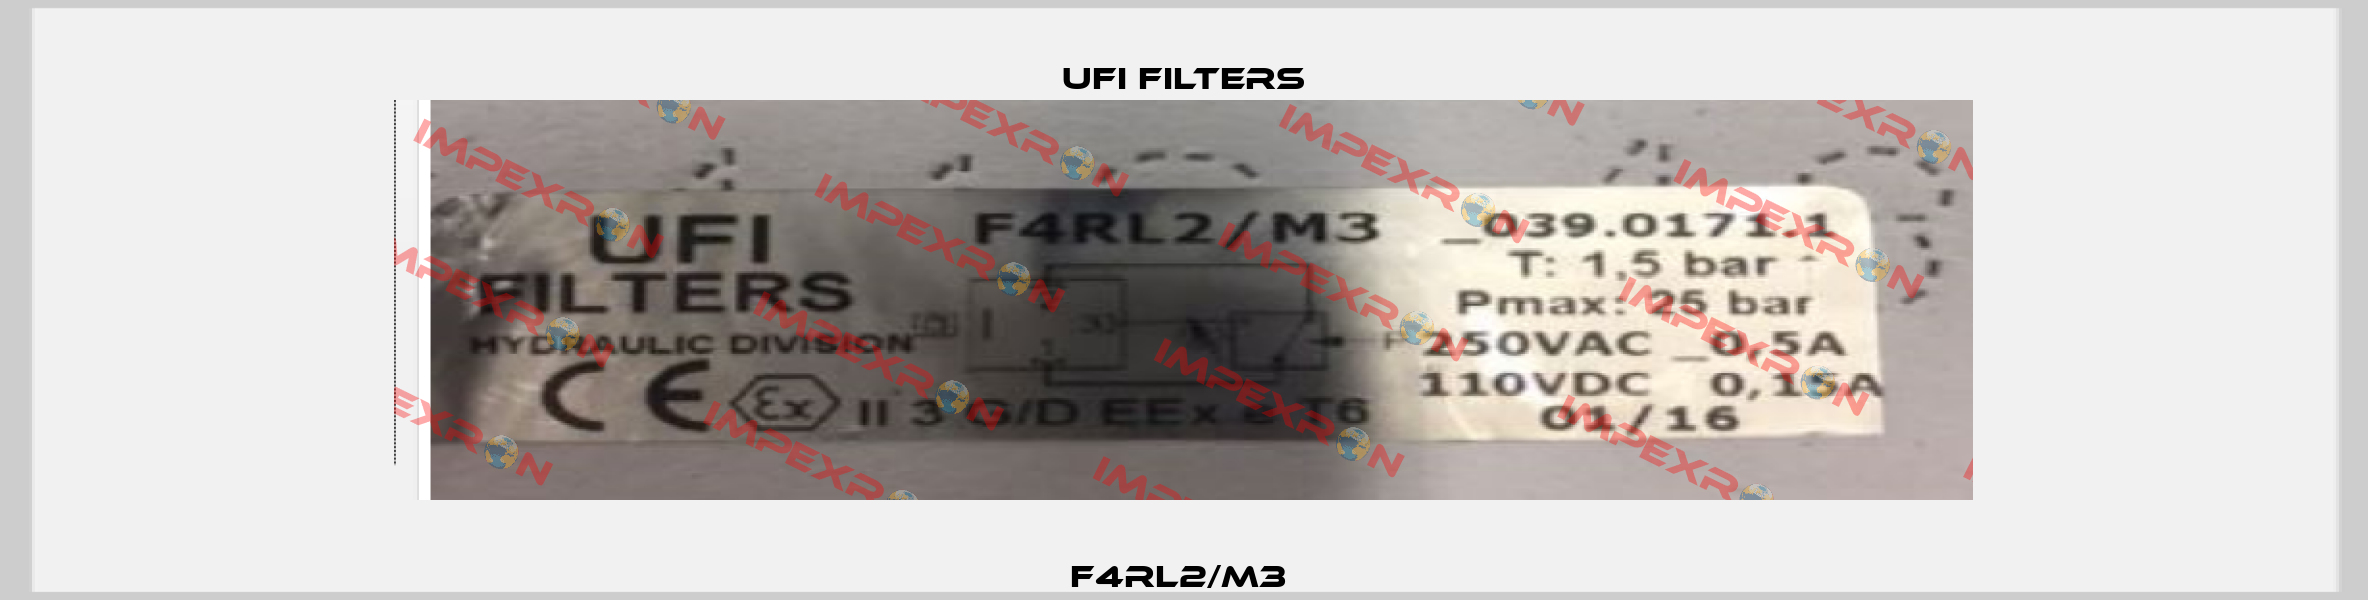 F4RL2/M3  Ufi Filters